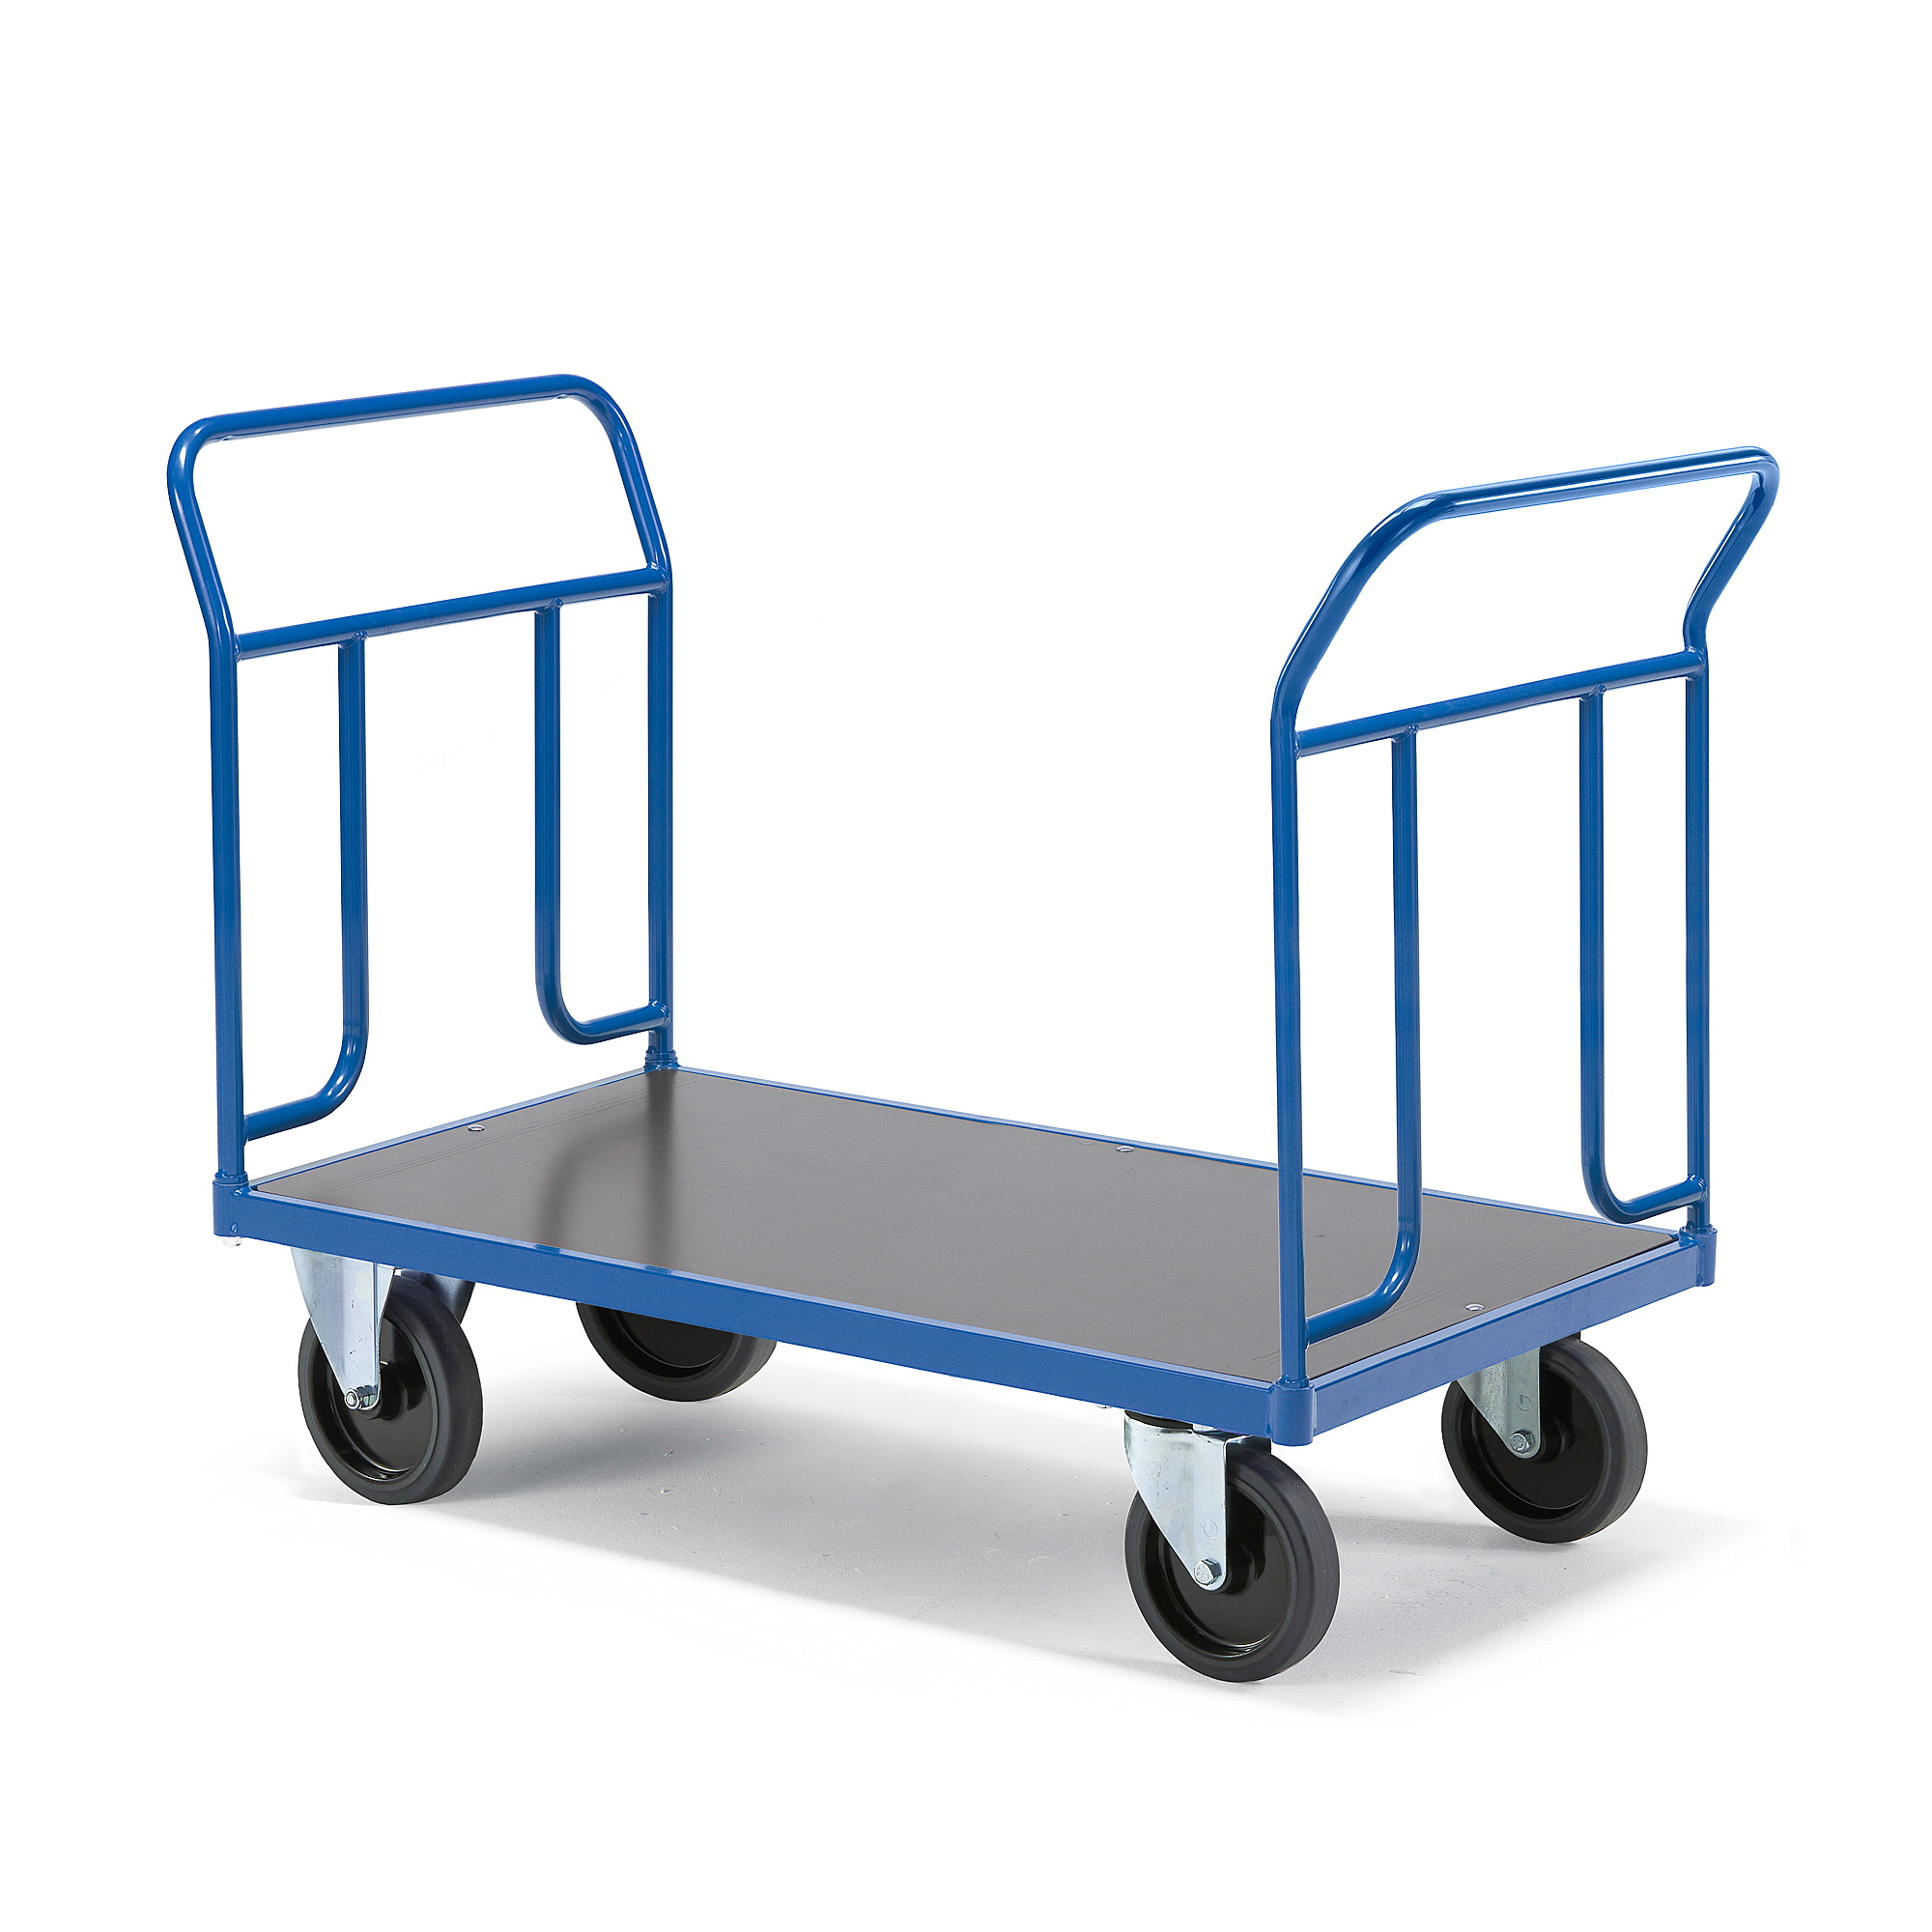 Plošinový vozík TRANSFER, 2 čelní trubkové rámy, 1200x800 mm, 1000 kg, elastická gumová kola, bez br